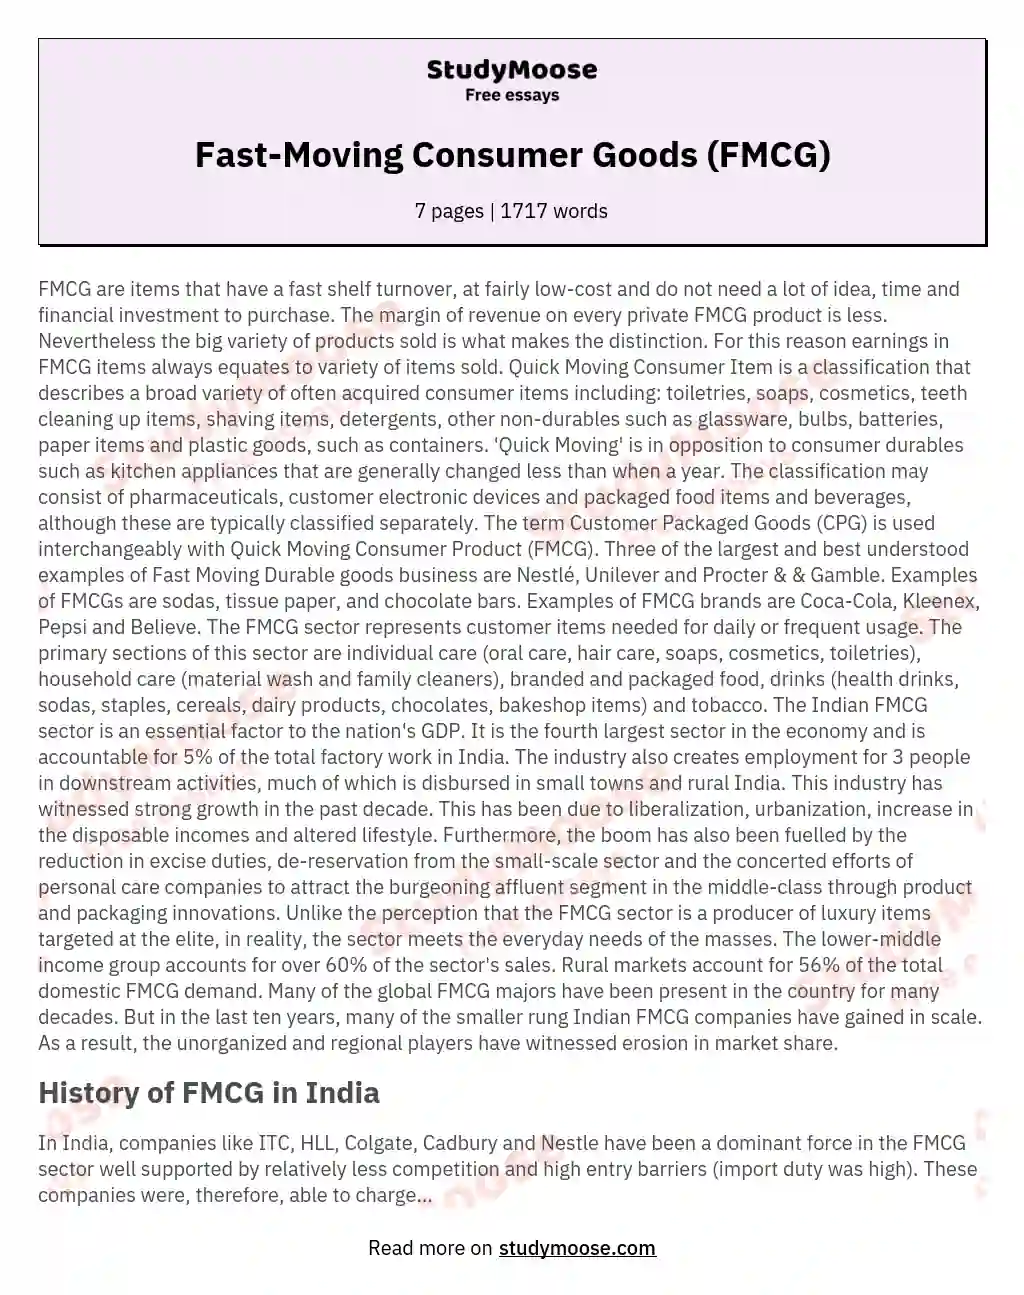 Fast-Moving Consumer Goods (FMCG) essay